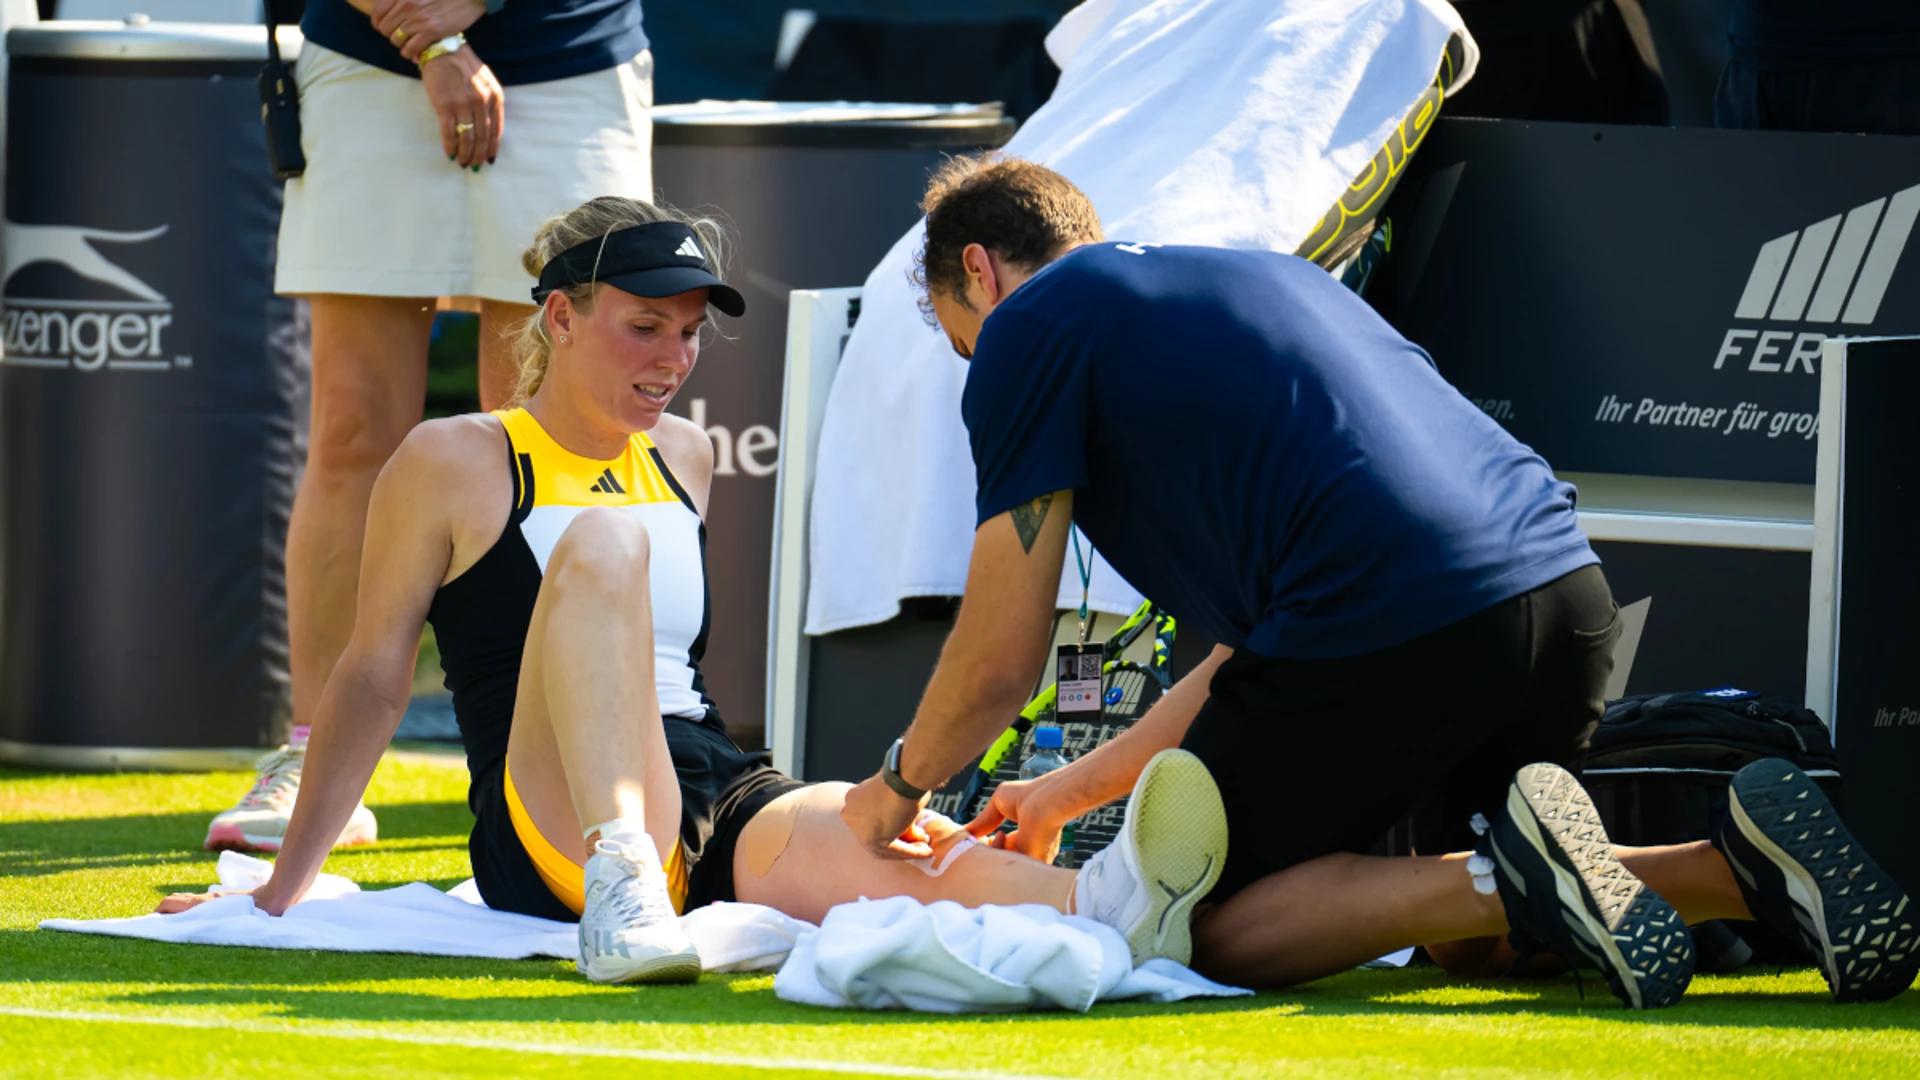 Wozniacki retires hurt after fall, Badosa knocked out at Bad Homburg